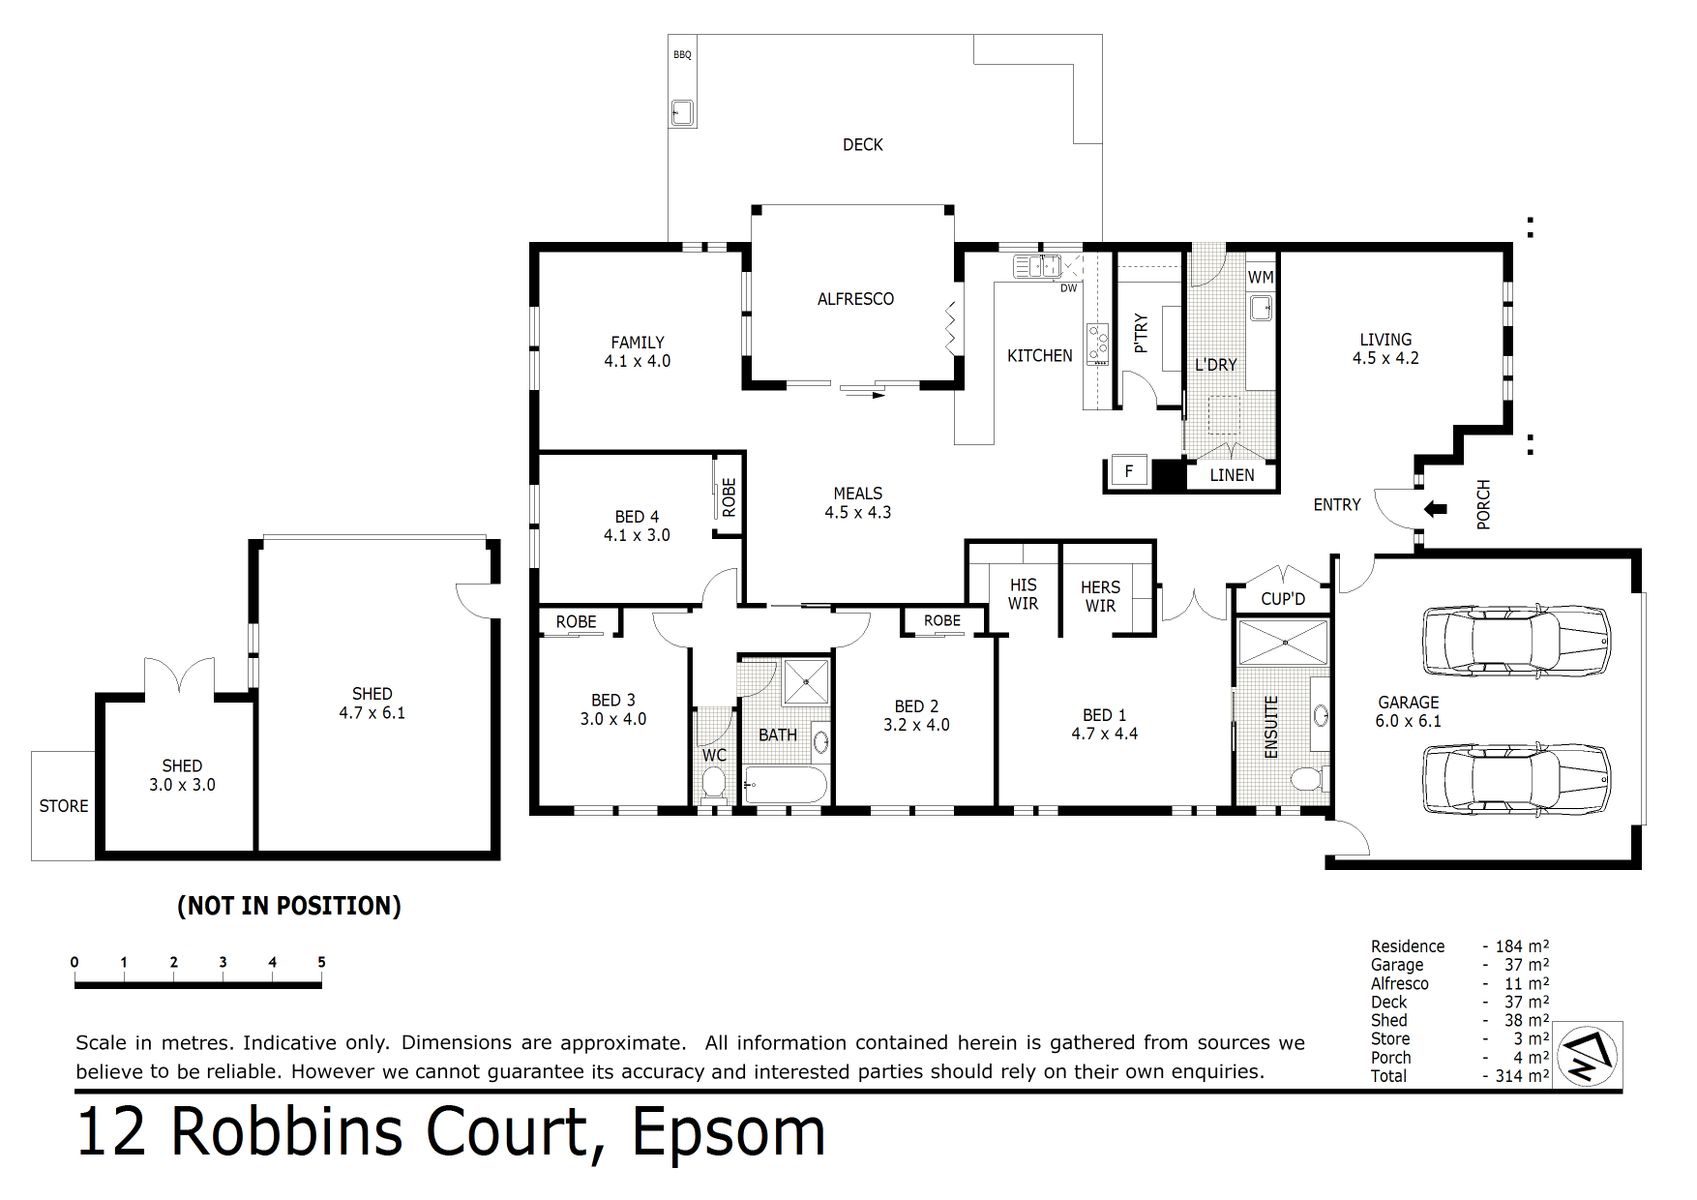 12 Robbins Court Epsom (04 JAN 2022) 221sqm (1)